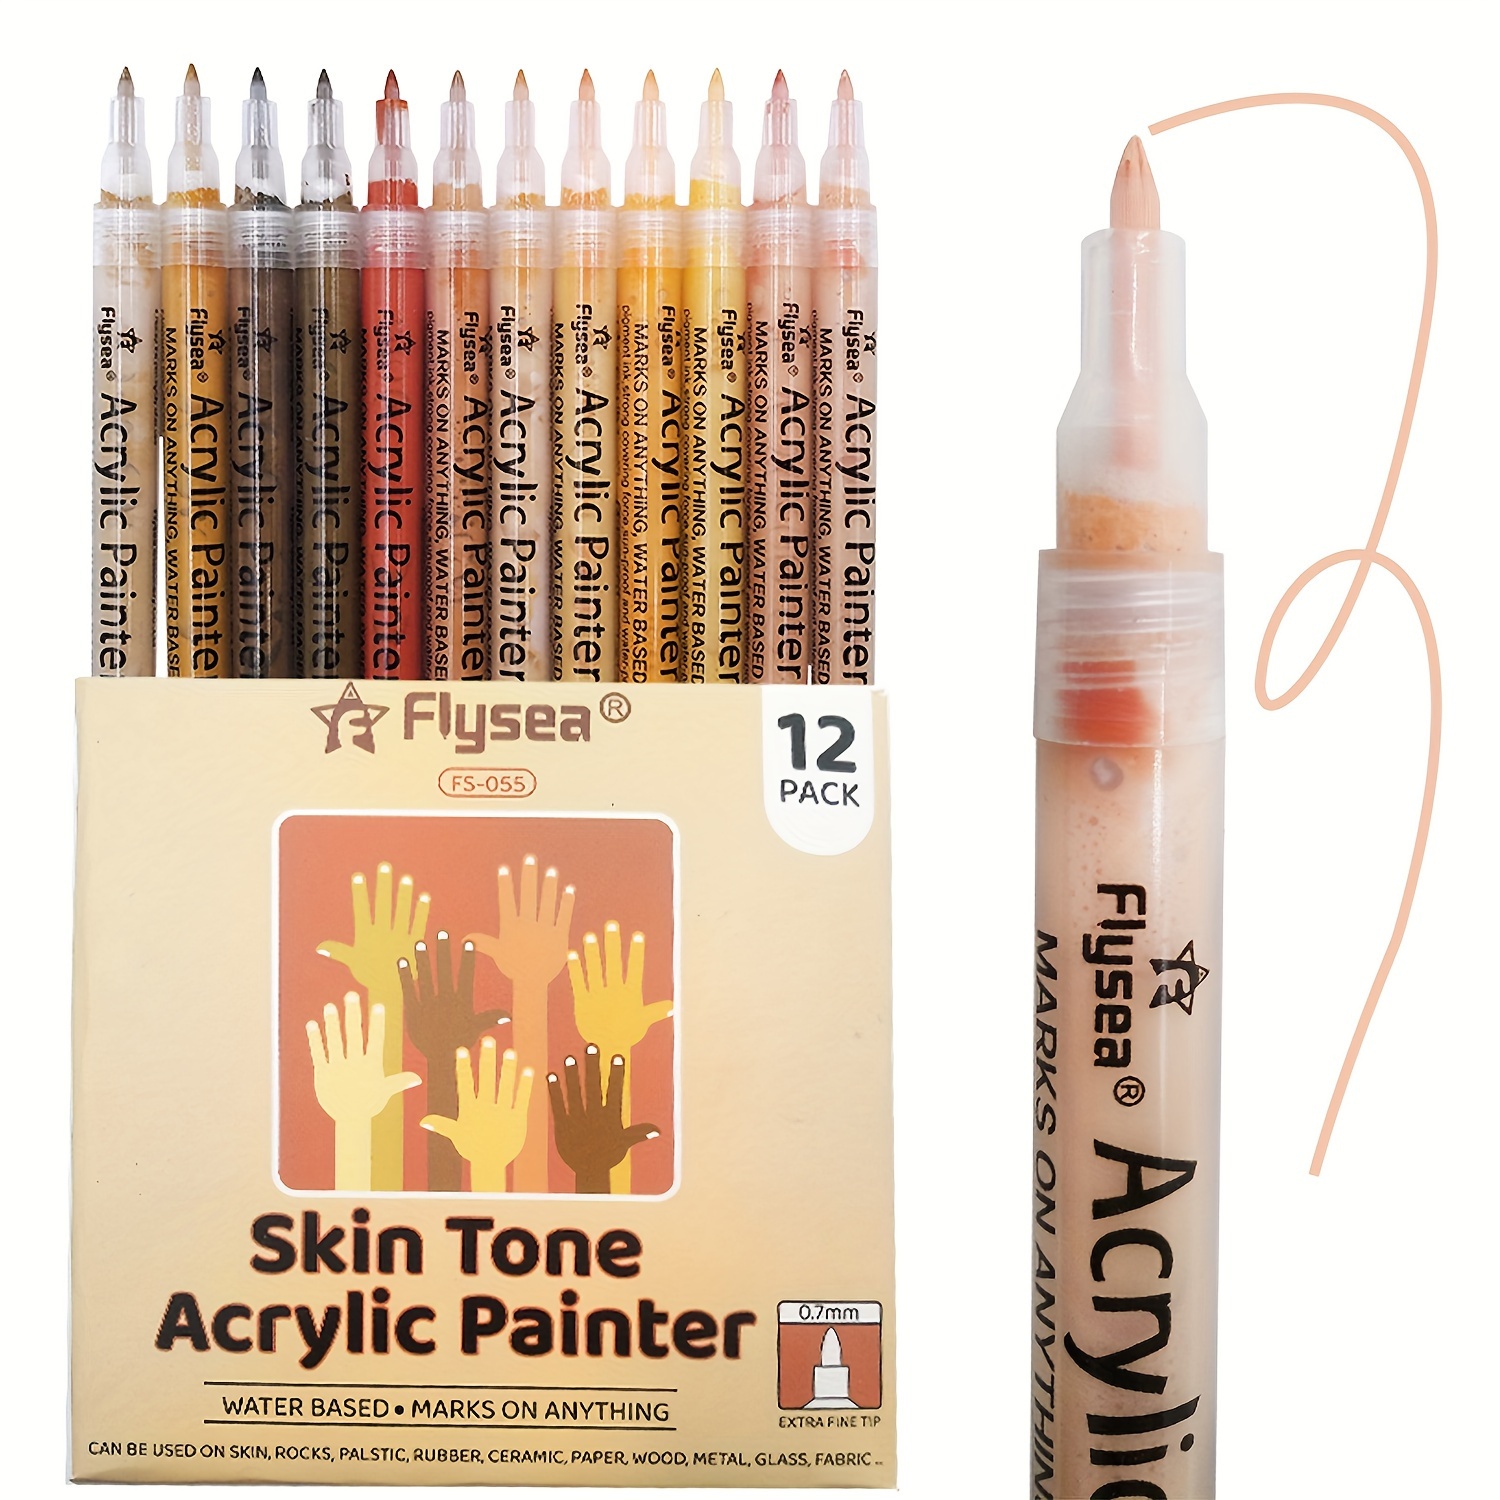 12pcs Art Pens, Drawing Outliners, Handmade Waterproof Pens, Black Fine  Pens, Manga Hand Drawing Tracing Pens, Signature Pens